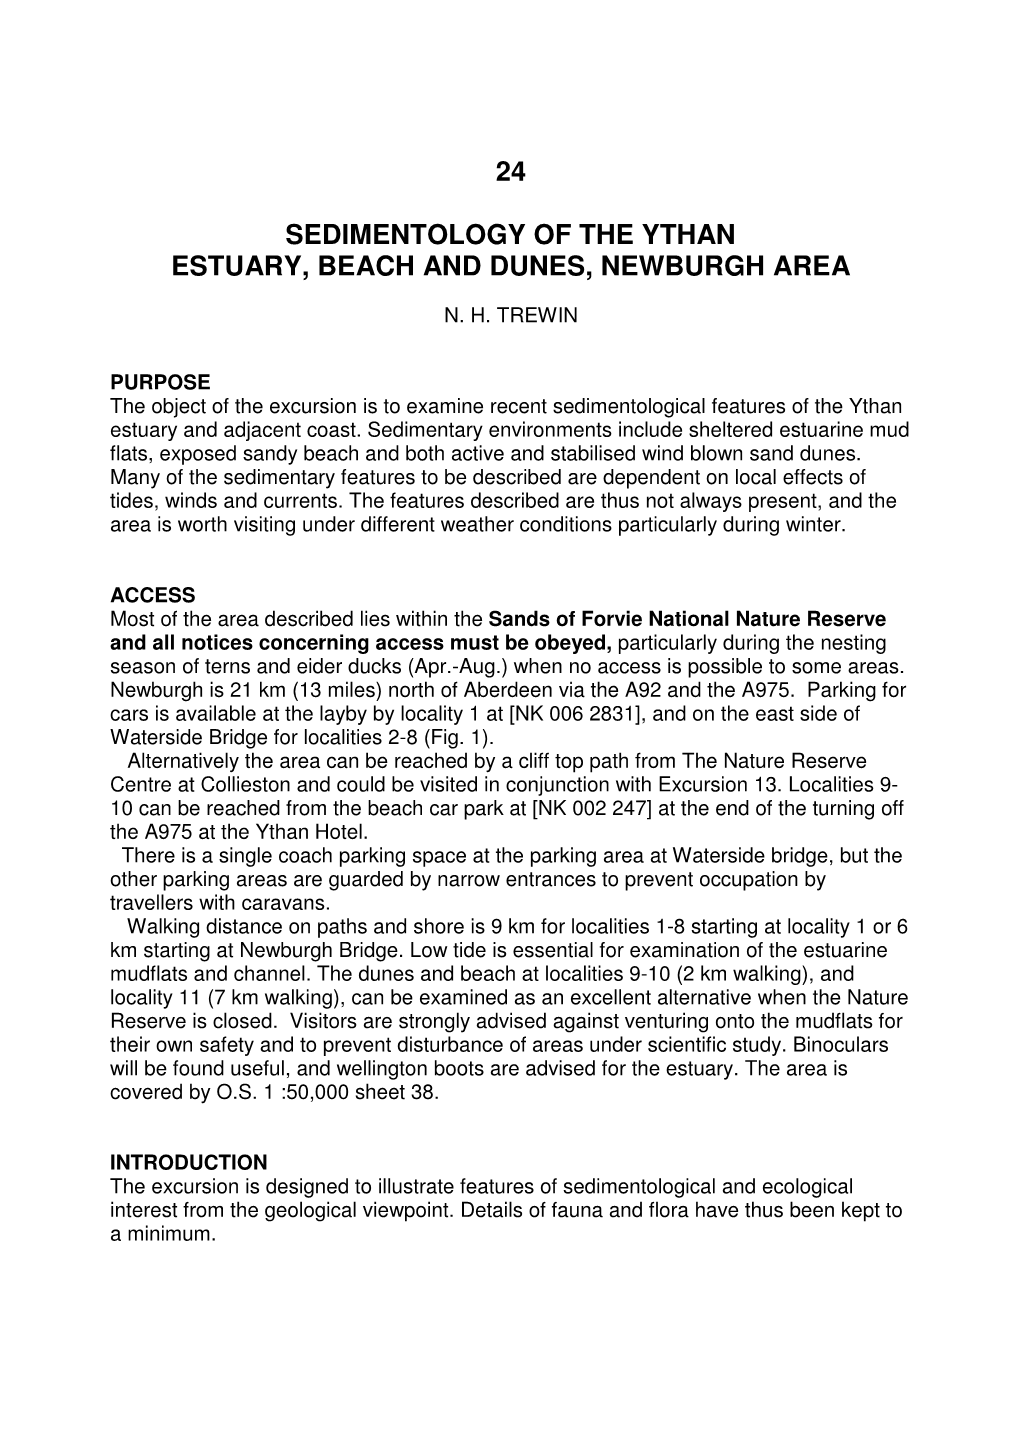 24 Sedimentology of the Ythan Estuary, Beach and Dunes, Newburgh Area